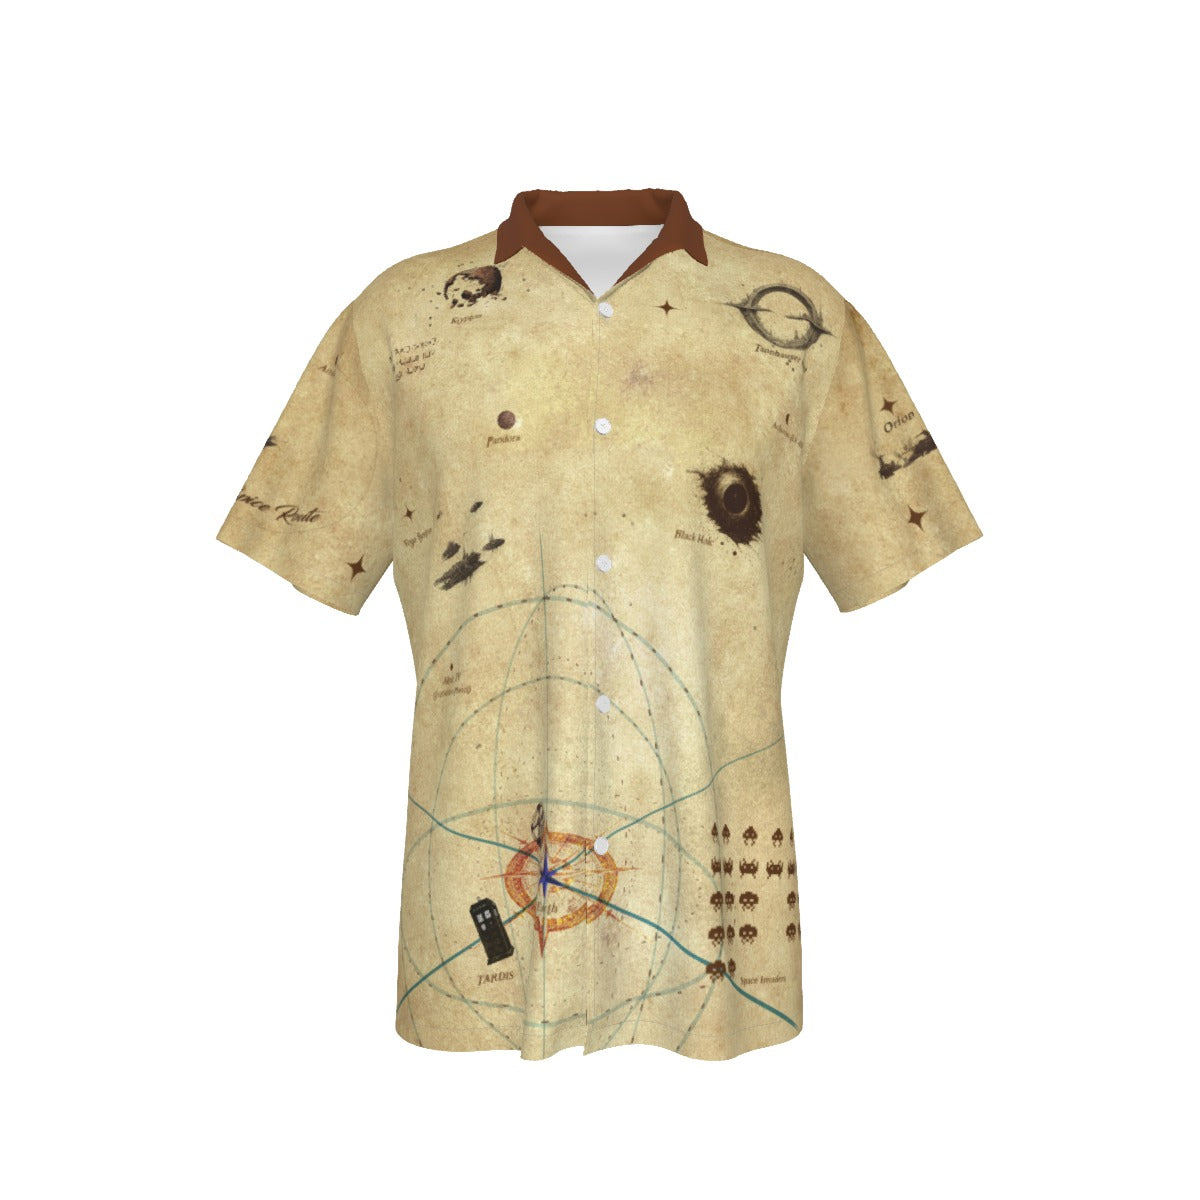 Space Pirate Treasure Map | Hawaiian Shirt